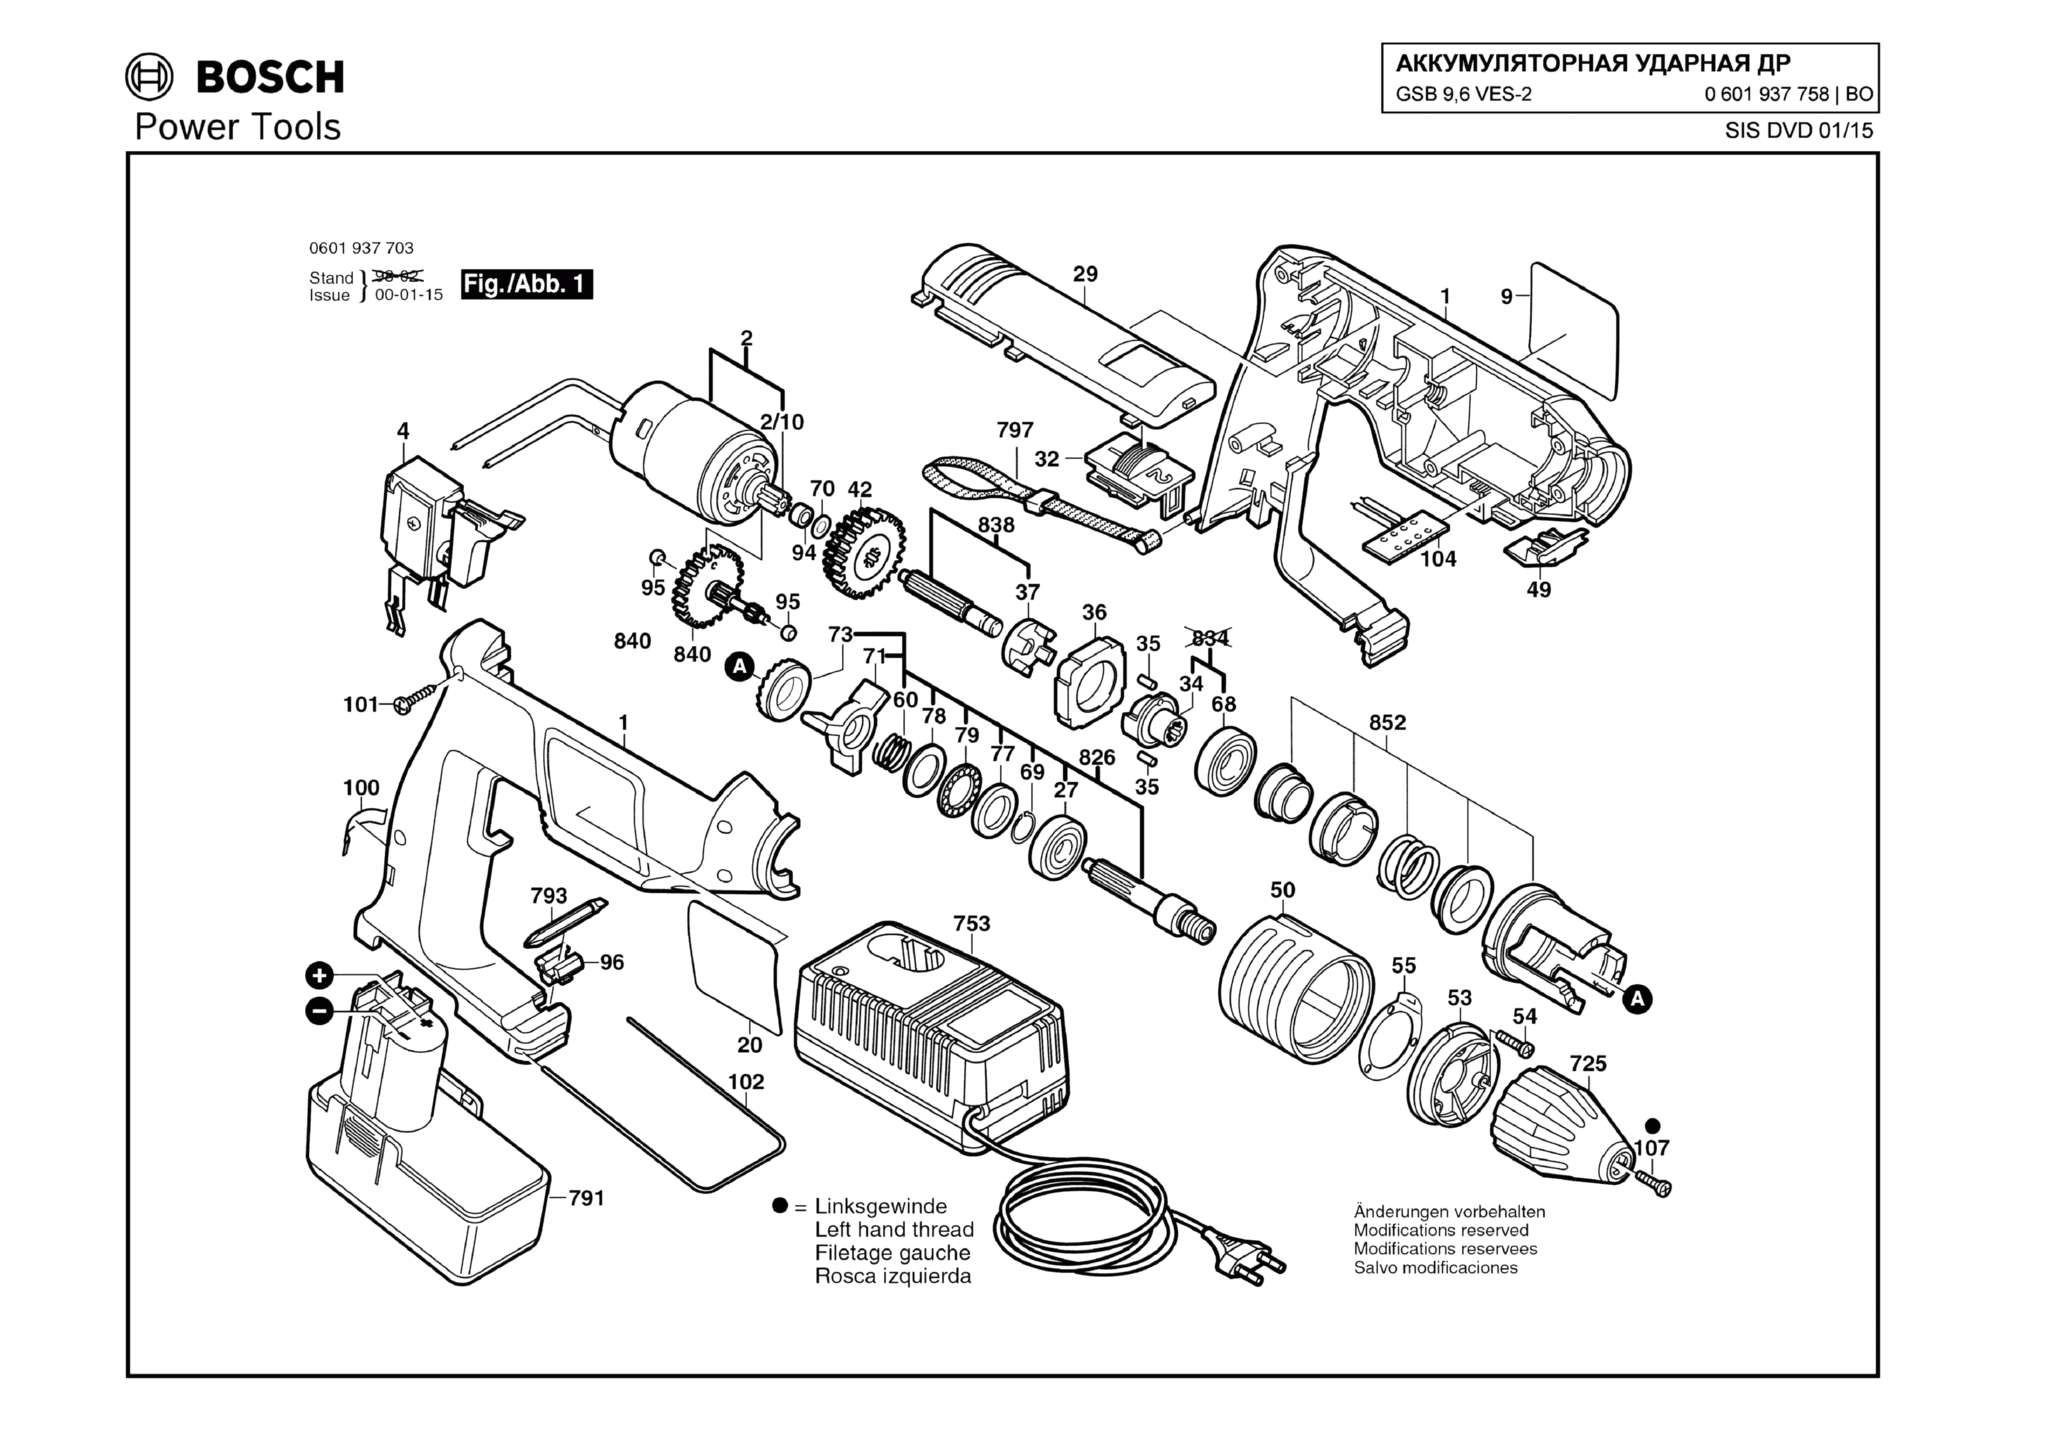 Запчасти, схема и деталировка Bosch GSB 9,6 VES-2 (ТИП 0601937758)